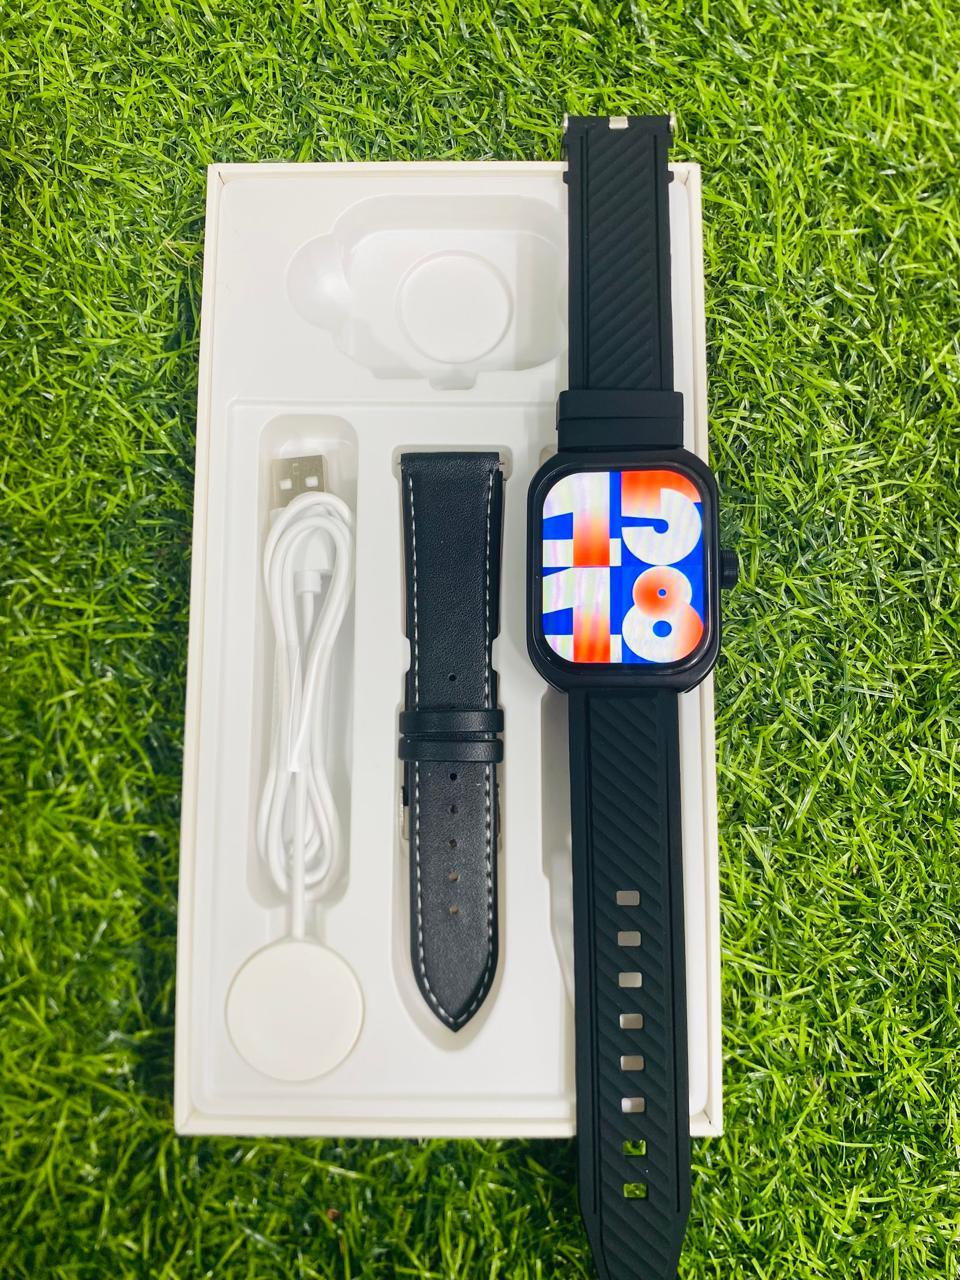 HT Bazar LG70 pro smartwatch HT Bazar